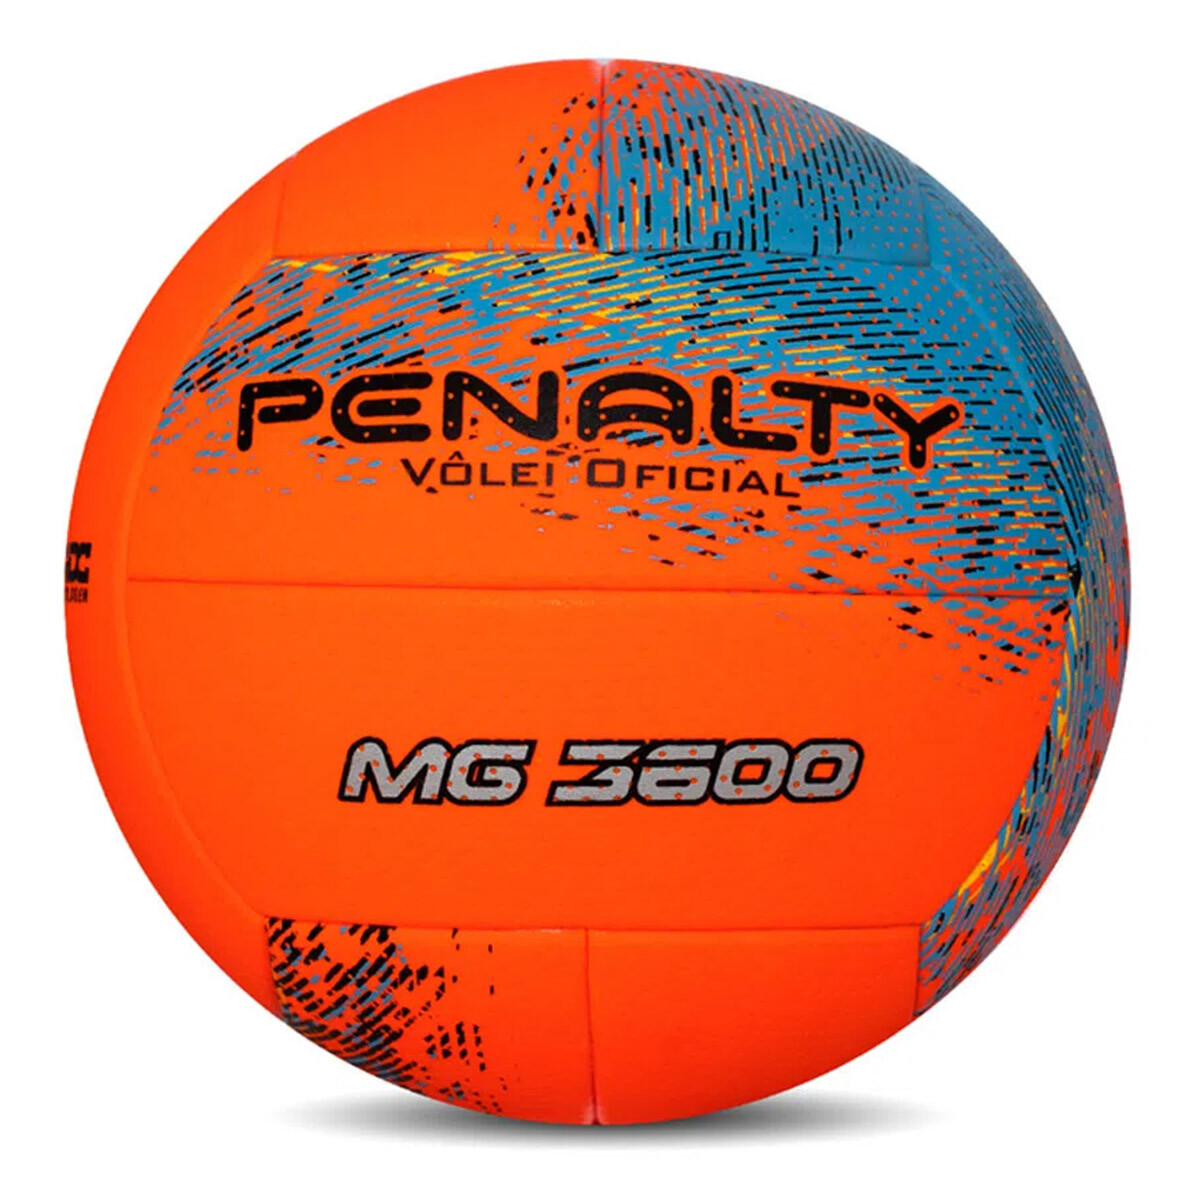 Pelota Penalty De Volleyball N5 Oficial 3600 Voley - Naranja 